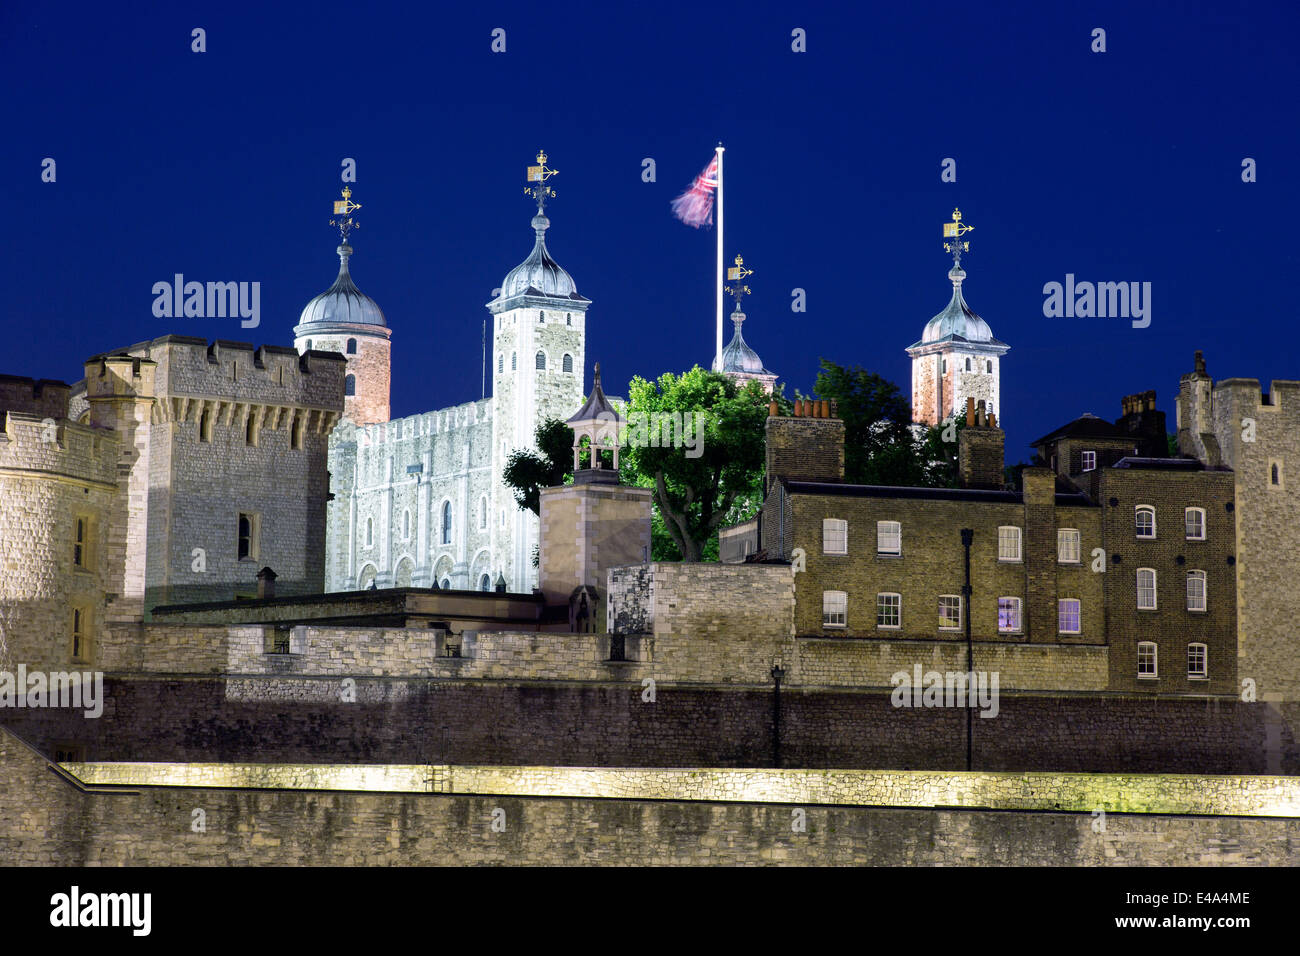 Tower Of London At Night London UK Stock Photo